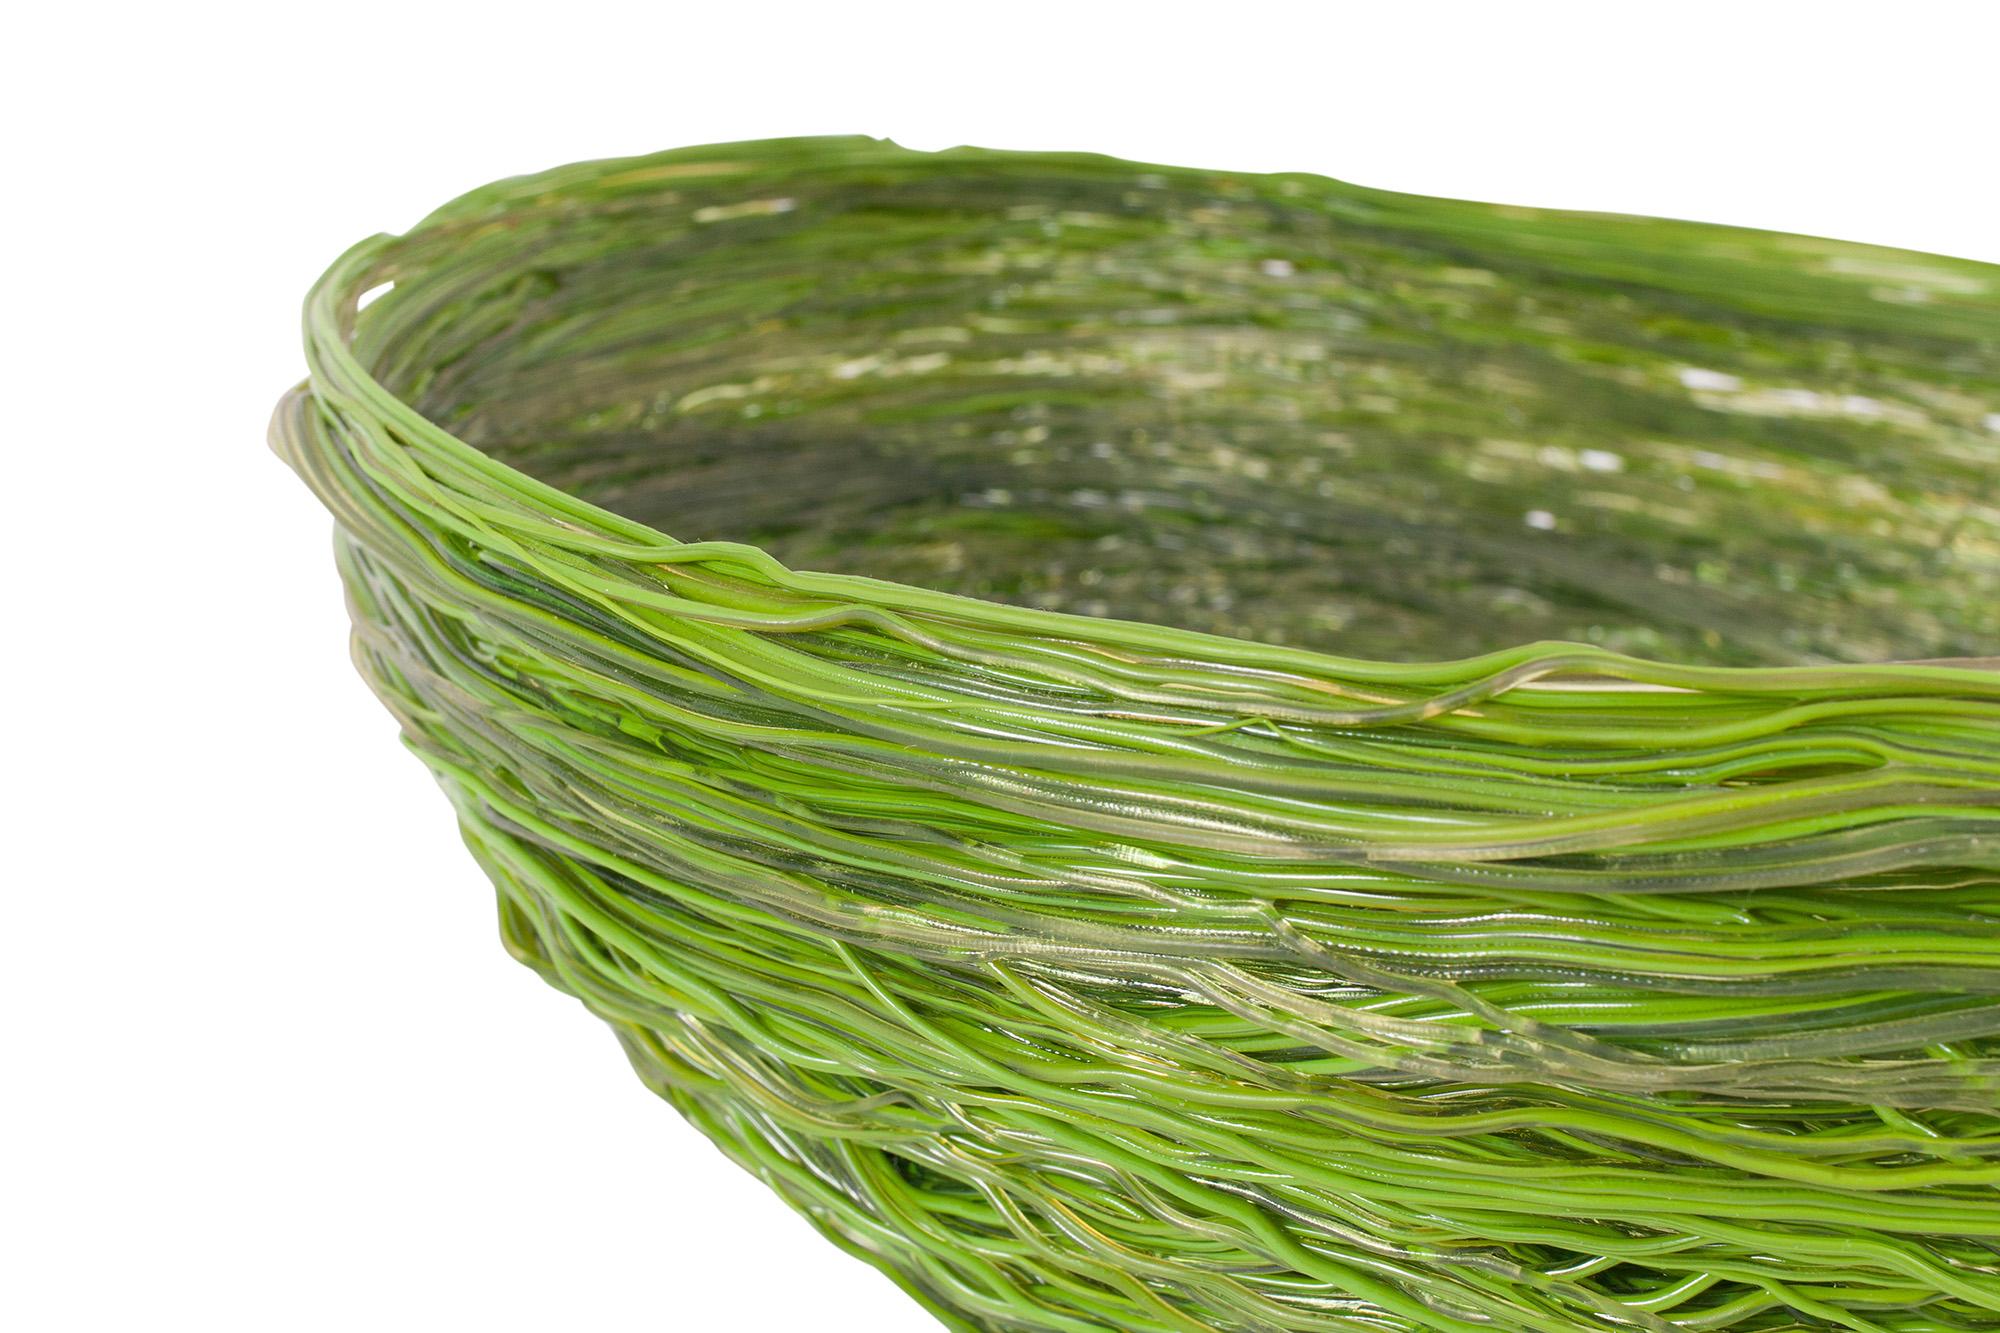 Italian Gaetano Pesce Green Resin 'Spaghetti Bowl' for Fish Design, 2009